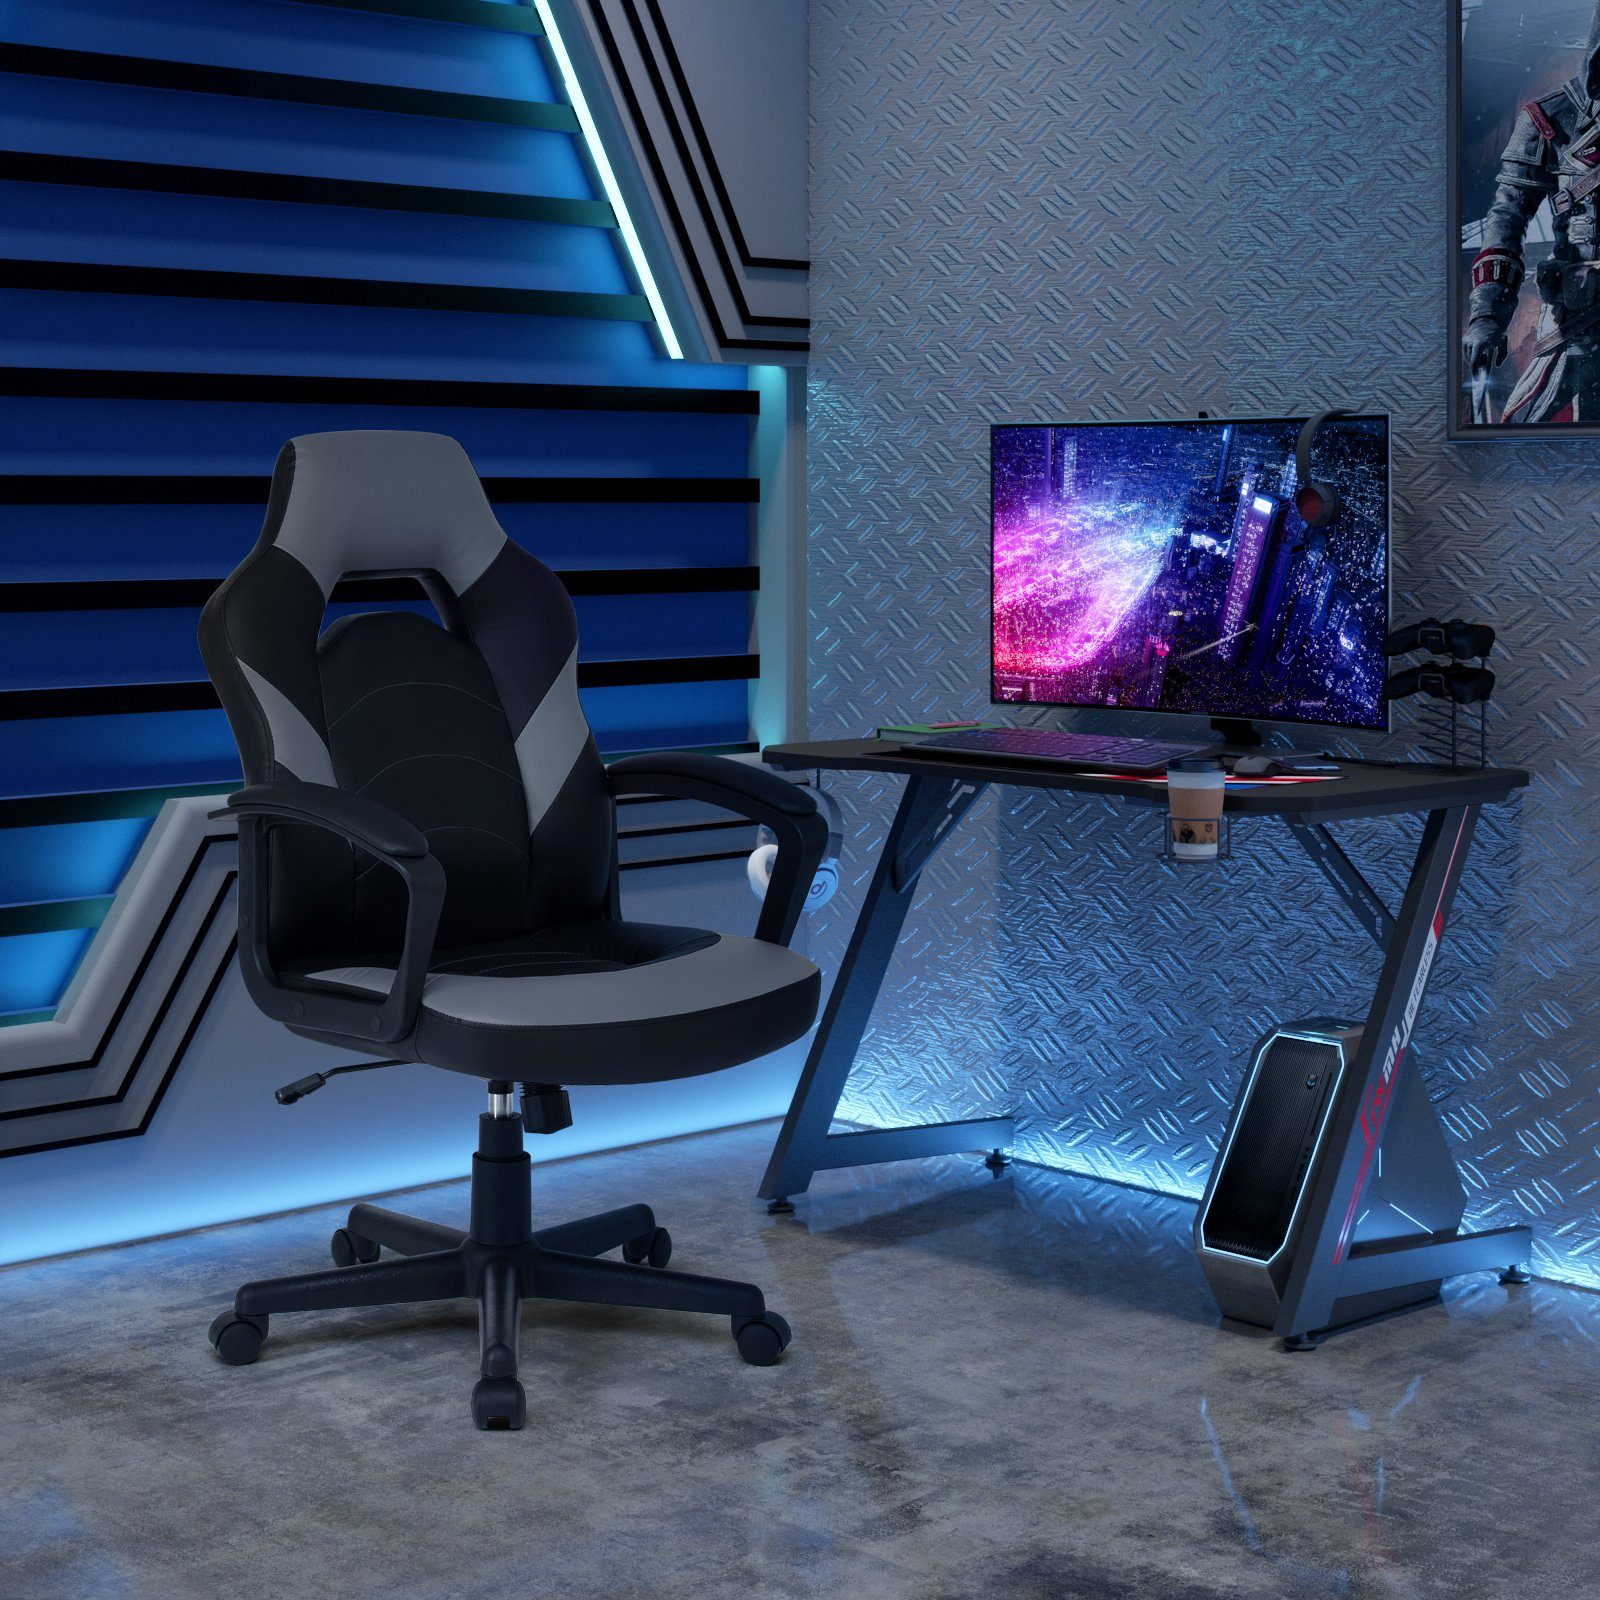 Intimate WM Heart grau Bürostuhl,Computerstuhl Home Gaming Office Chair